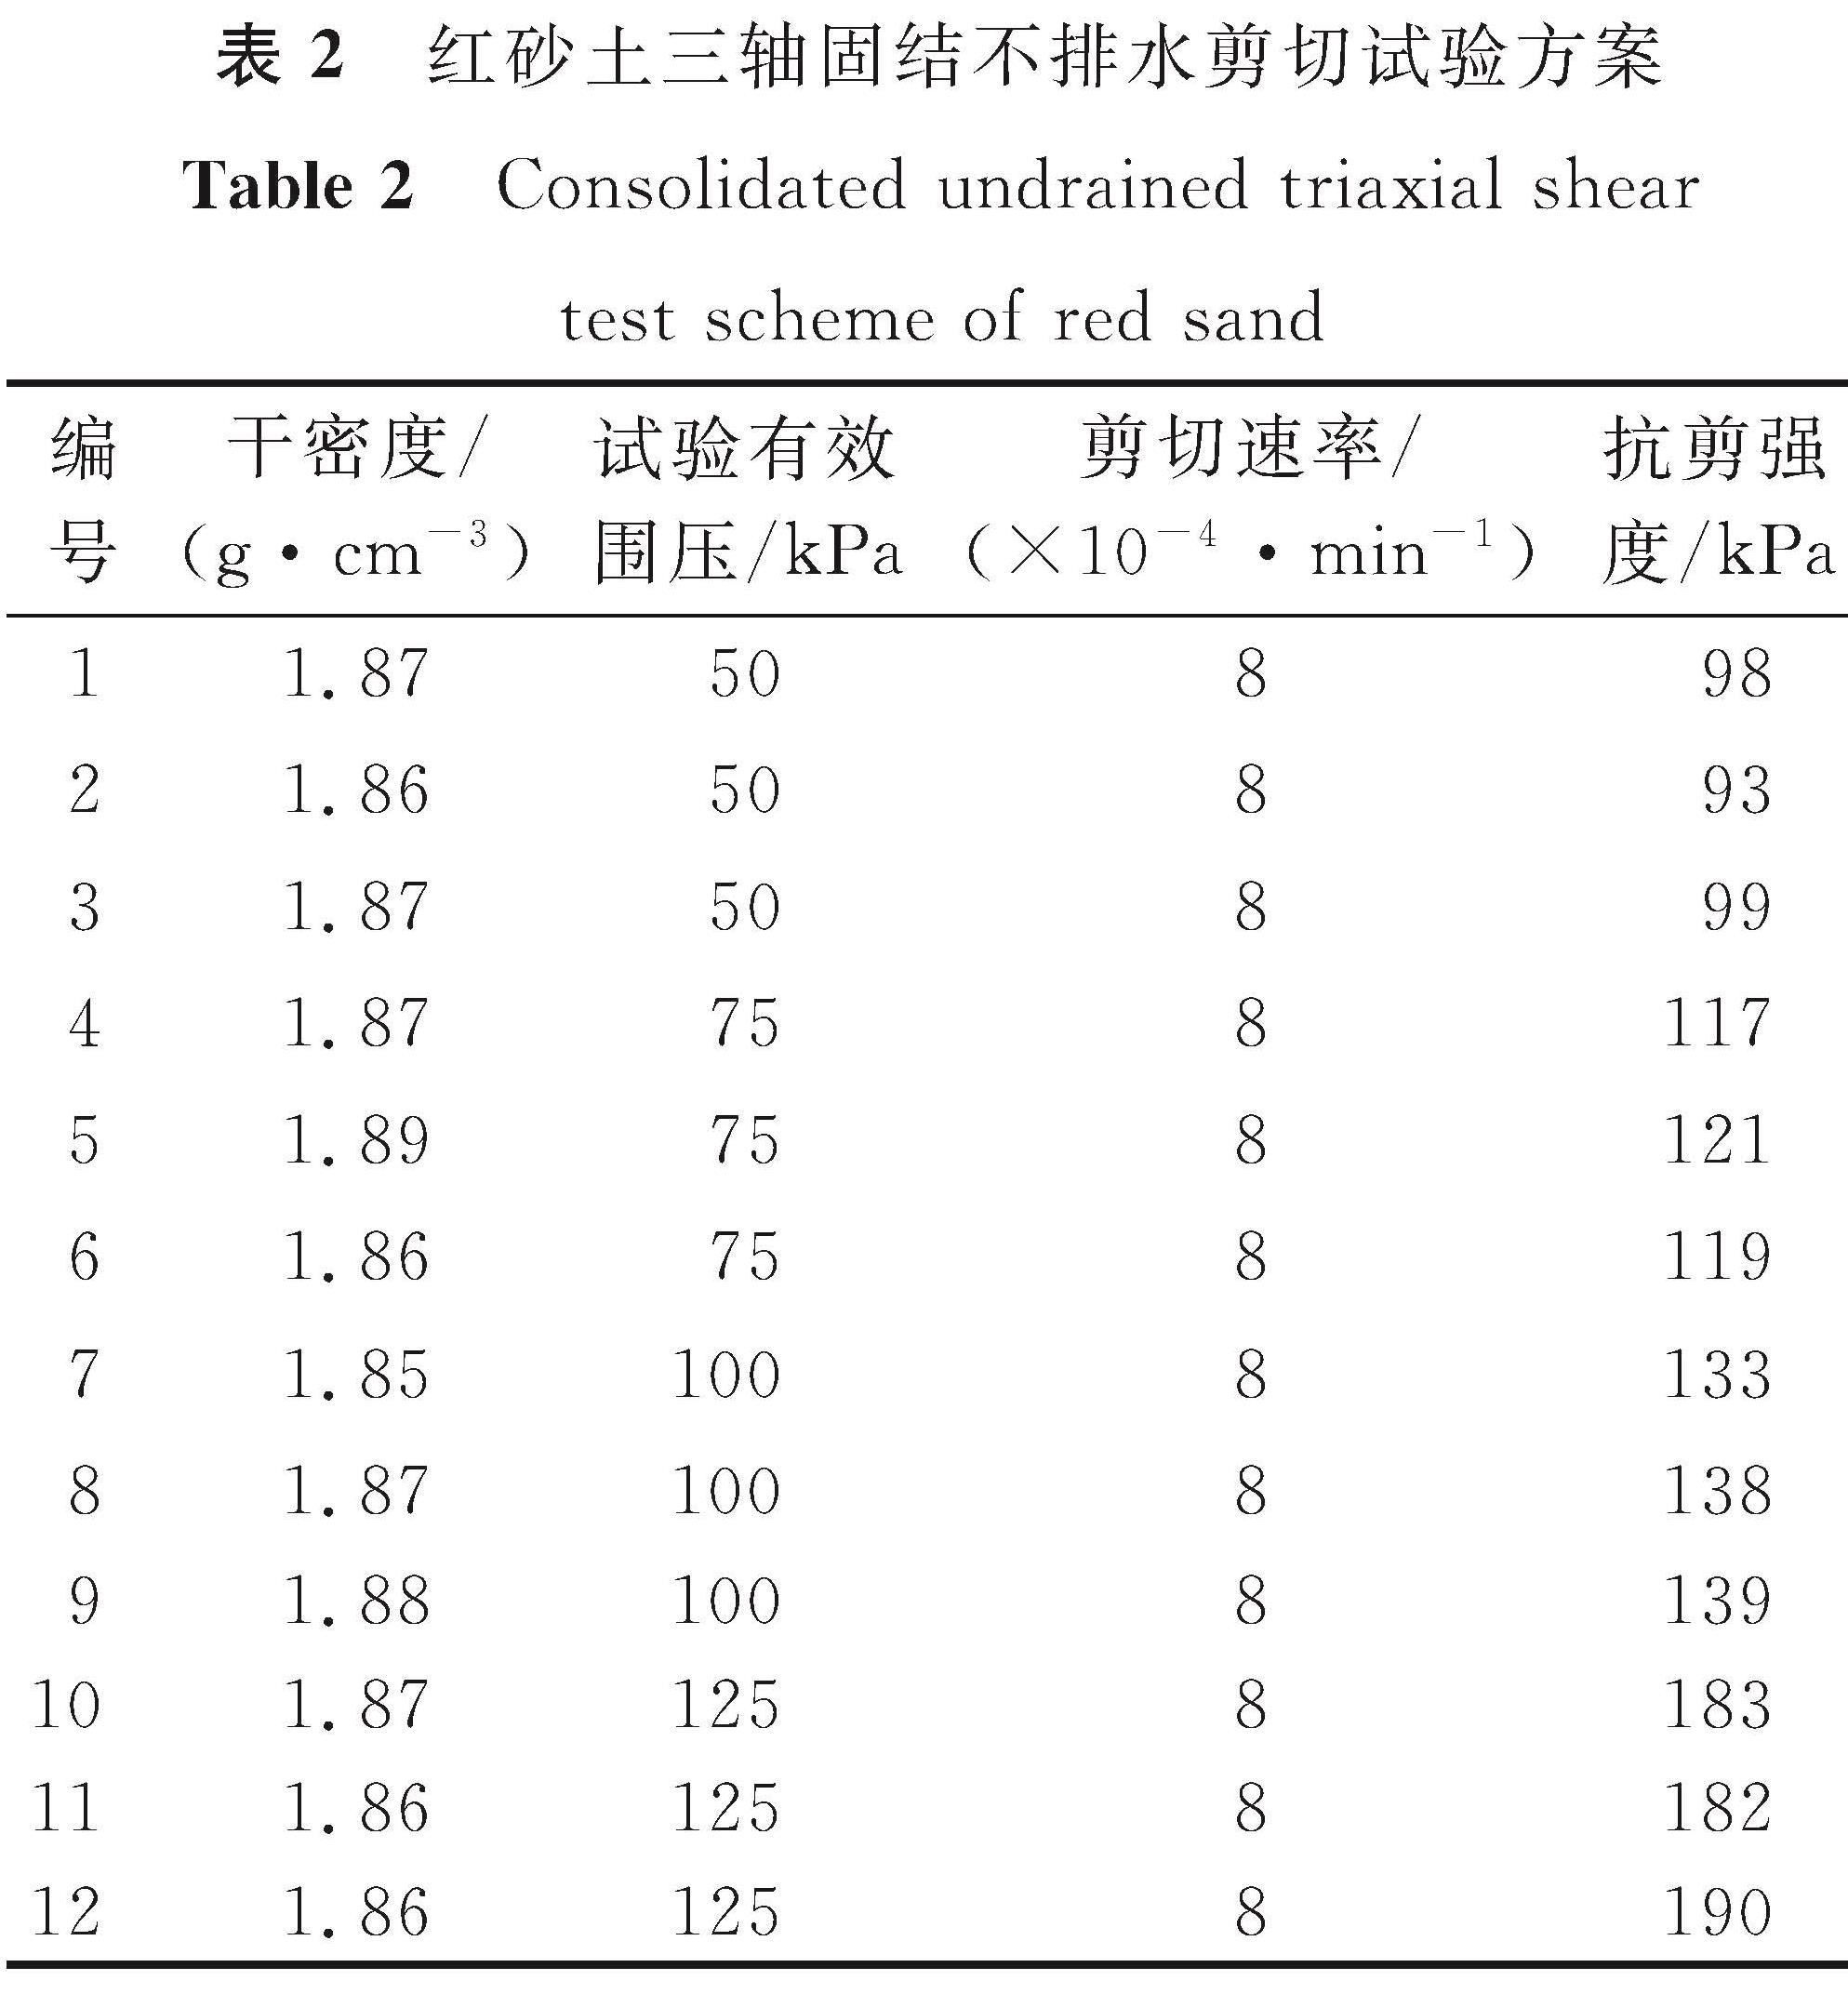 表2 红砂土三轴固结不排水剪切试验方案<br/>Table 2 Consolidated undrained triaxial shear test scheme of red sand